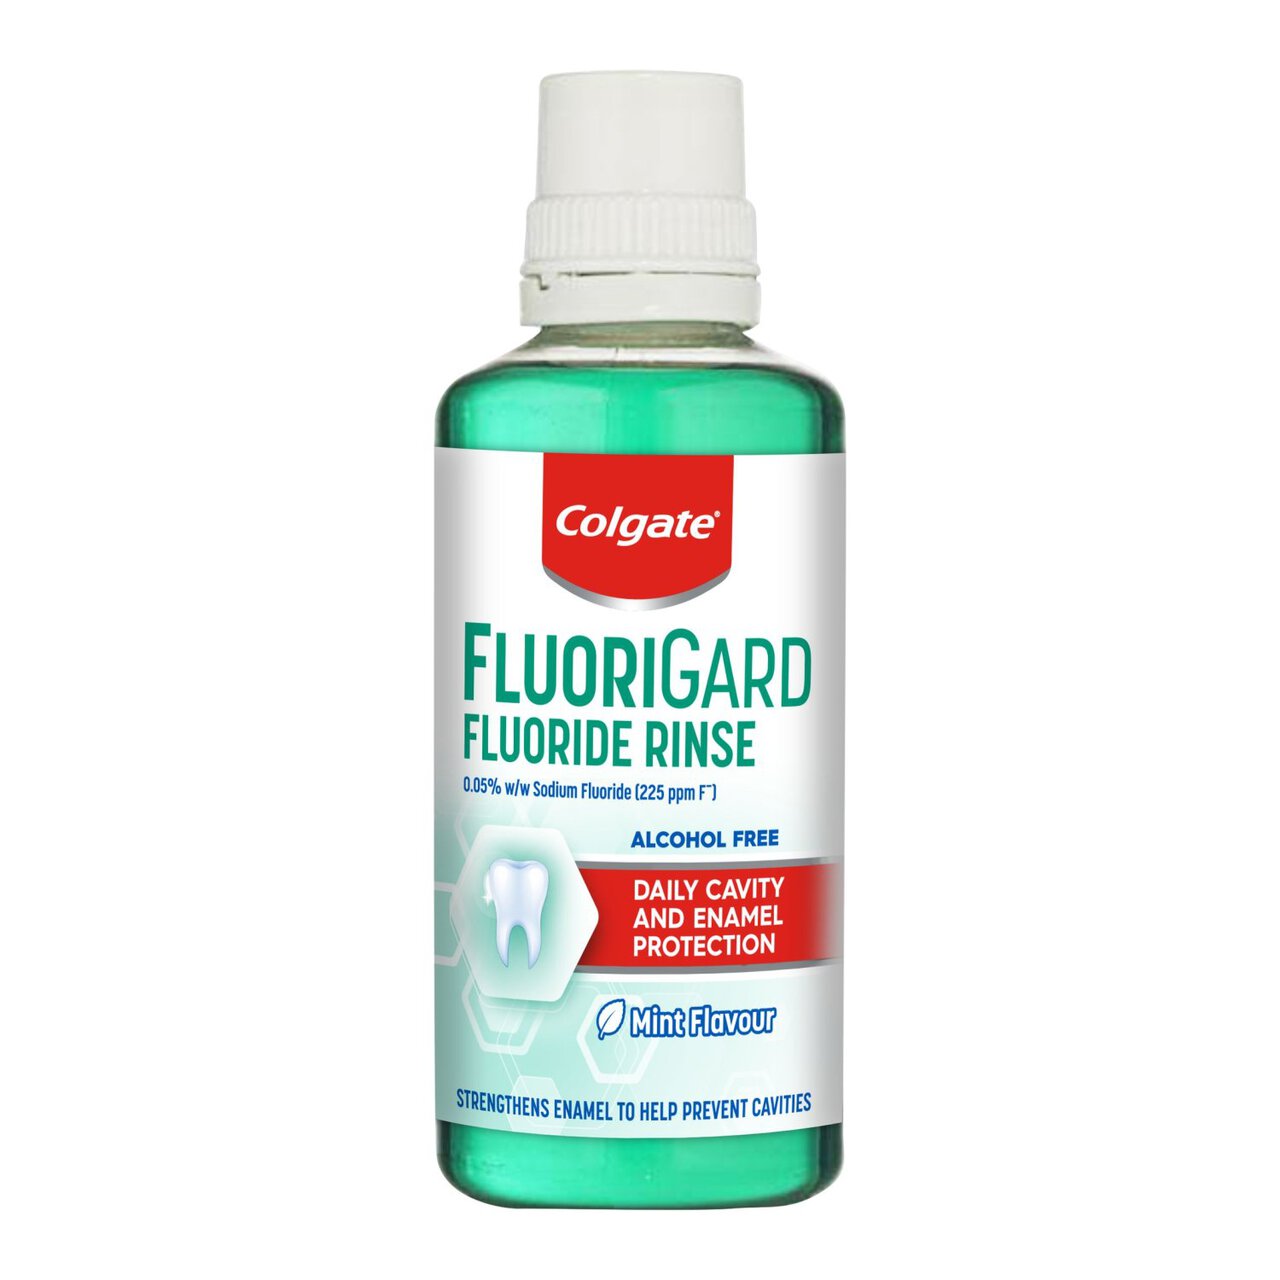 Colgate Fluorigard Fluoride Rinse (Alcohol free) Mouthwash 400ml